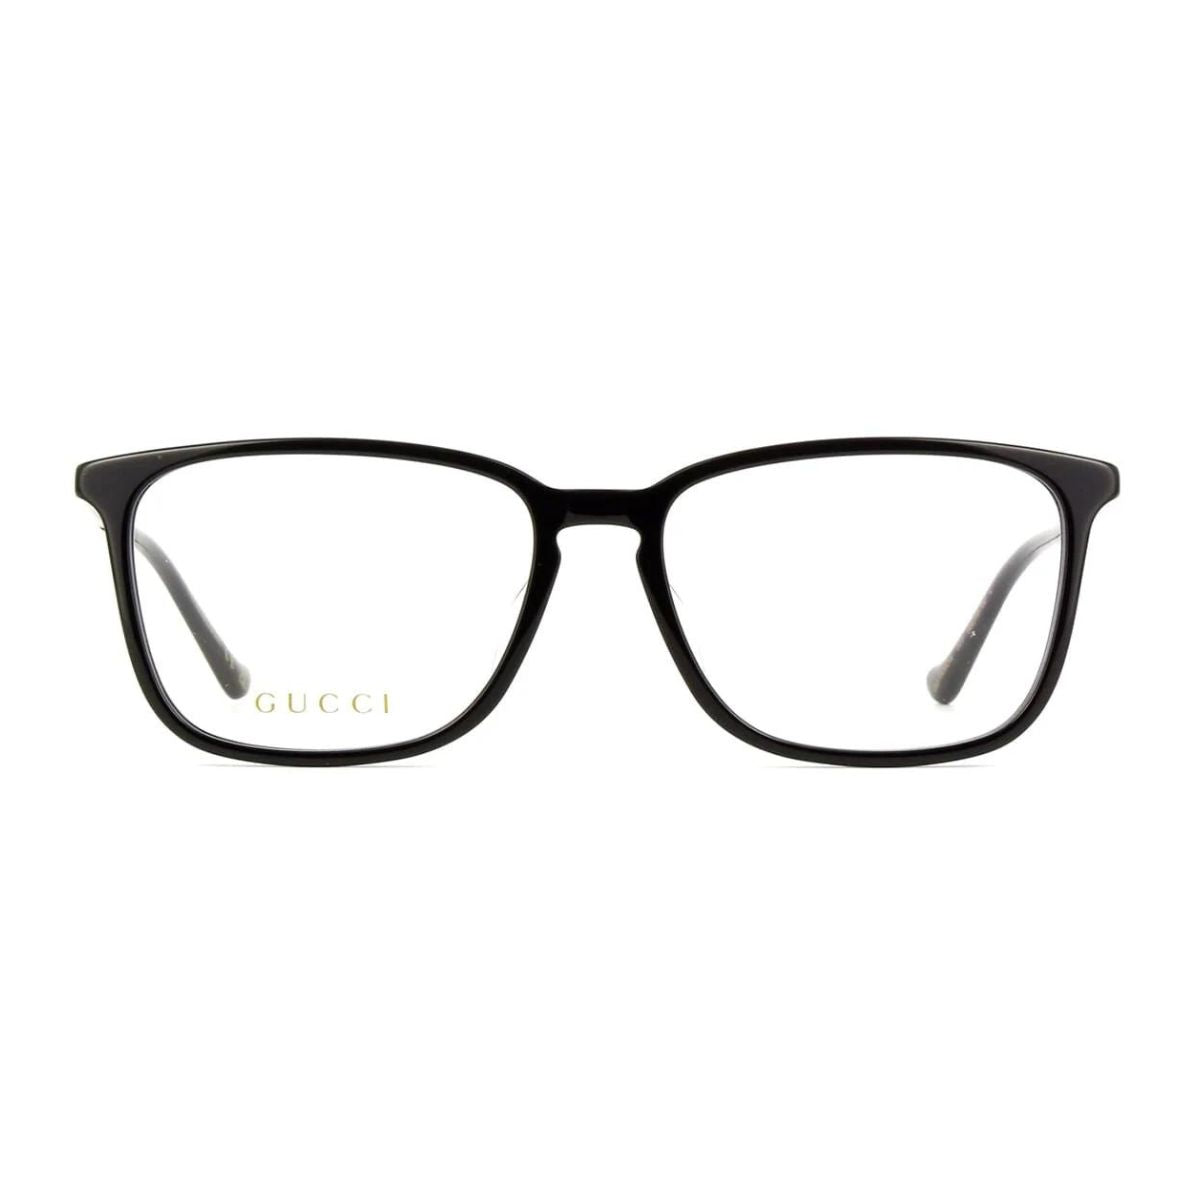 "buy Gucci GG1609OA 001 square shape power glasses frame for men's online at optorium"